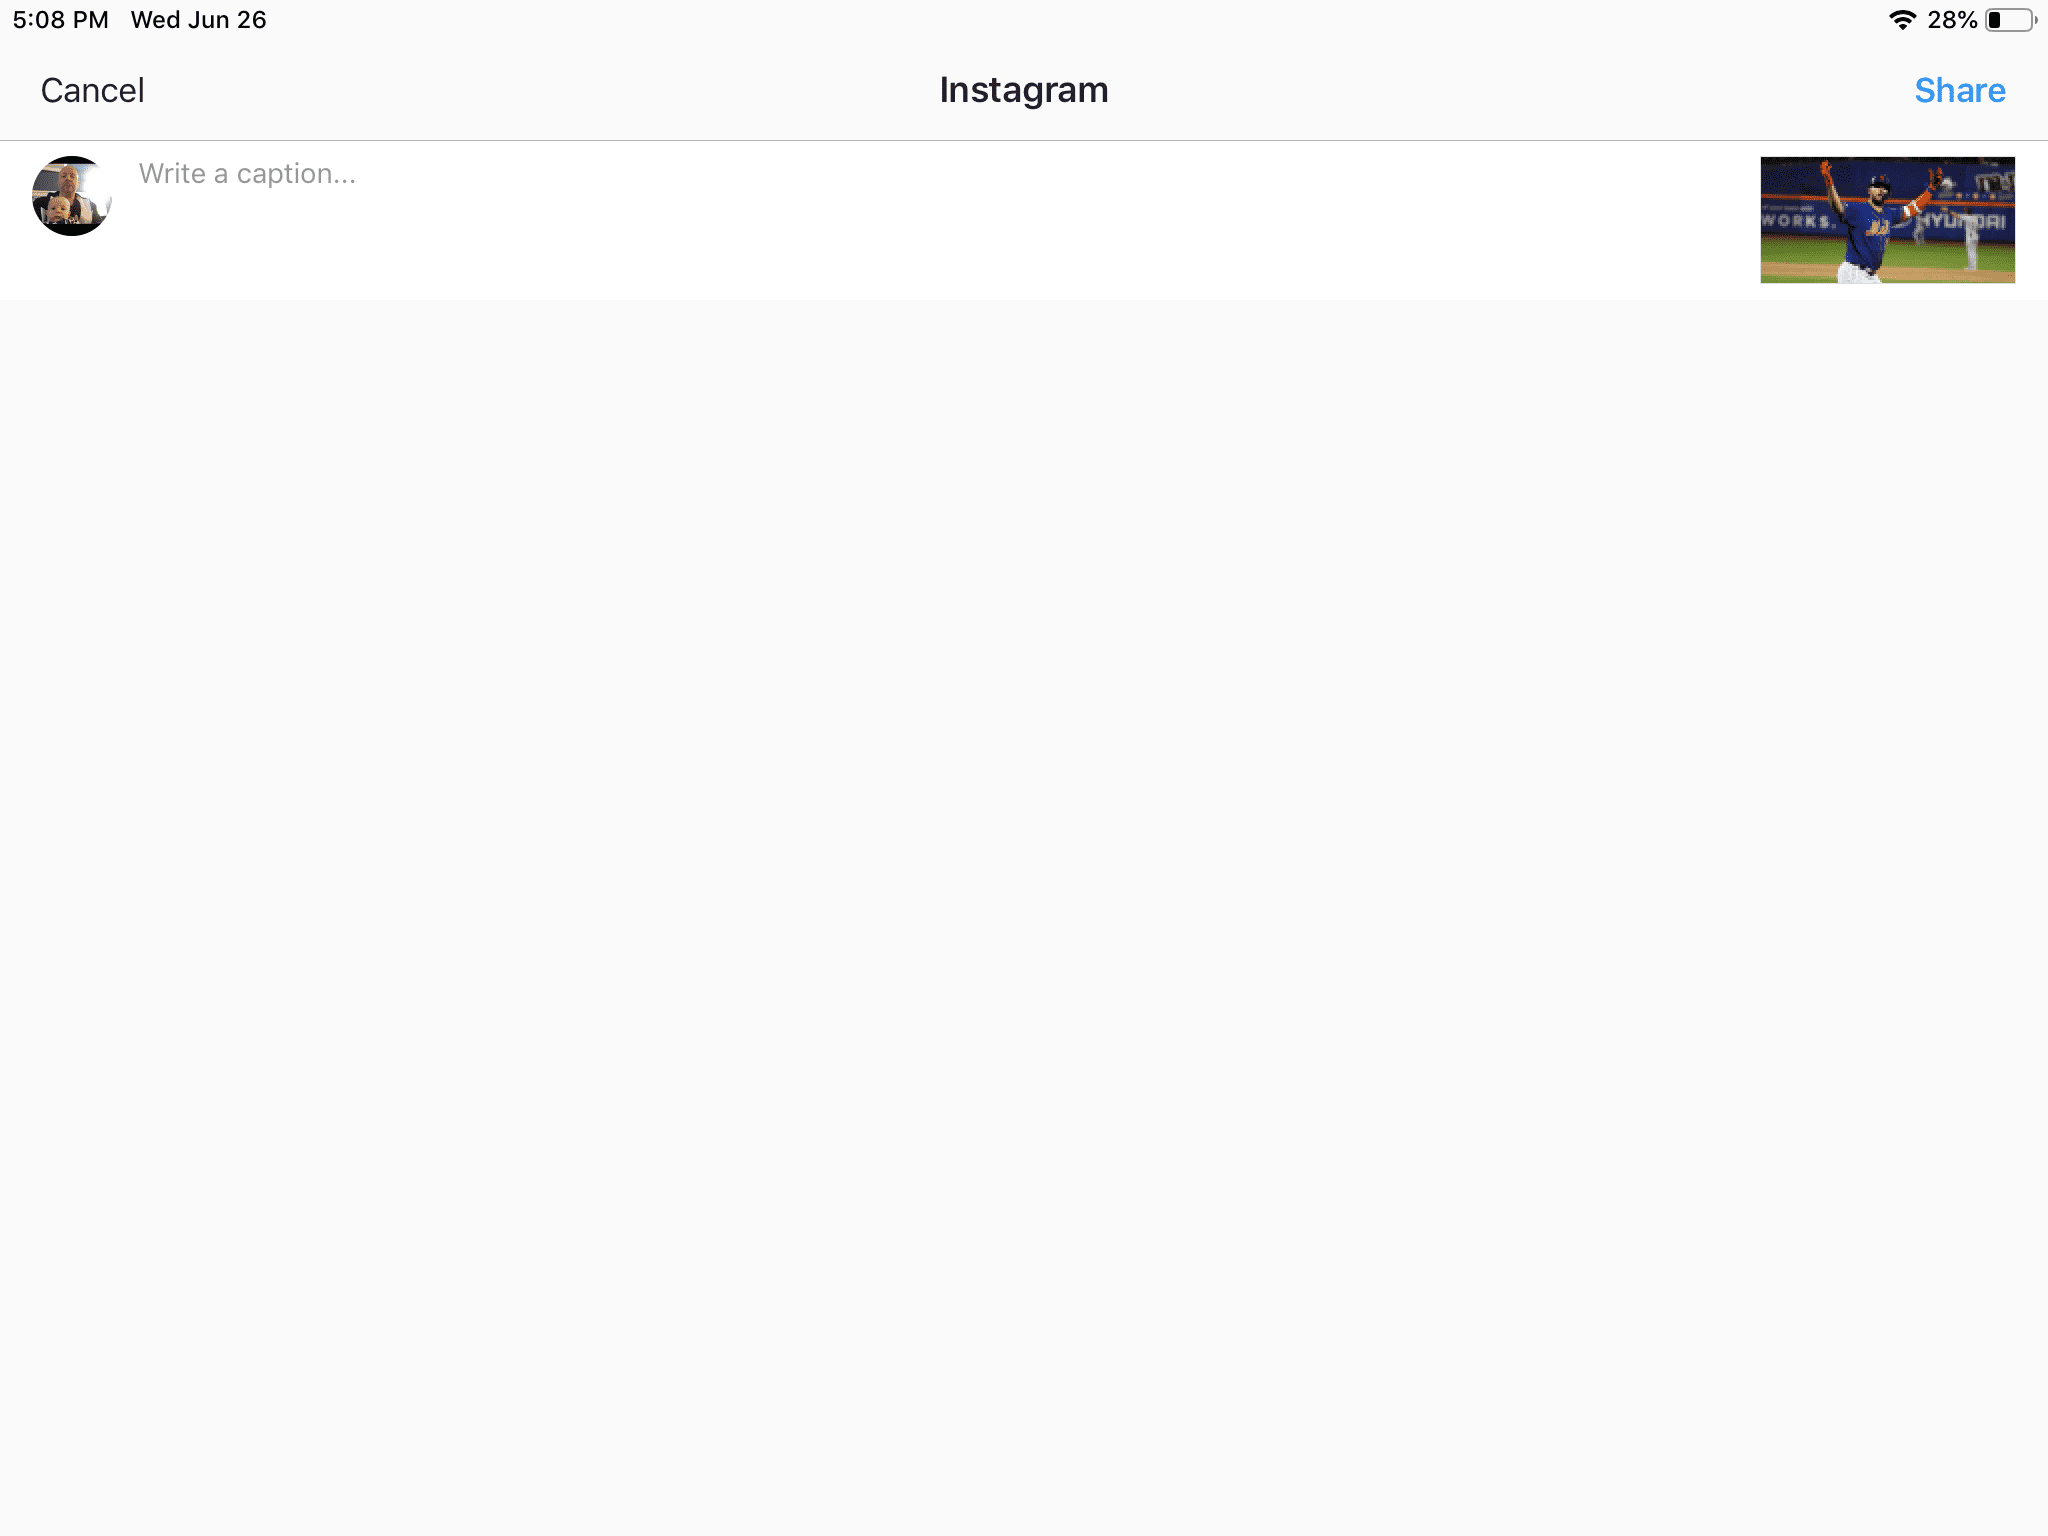 снимок экрана интерфейса обмена фотографиями из Instagram на iPad